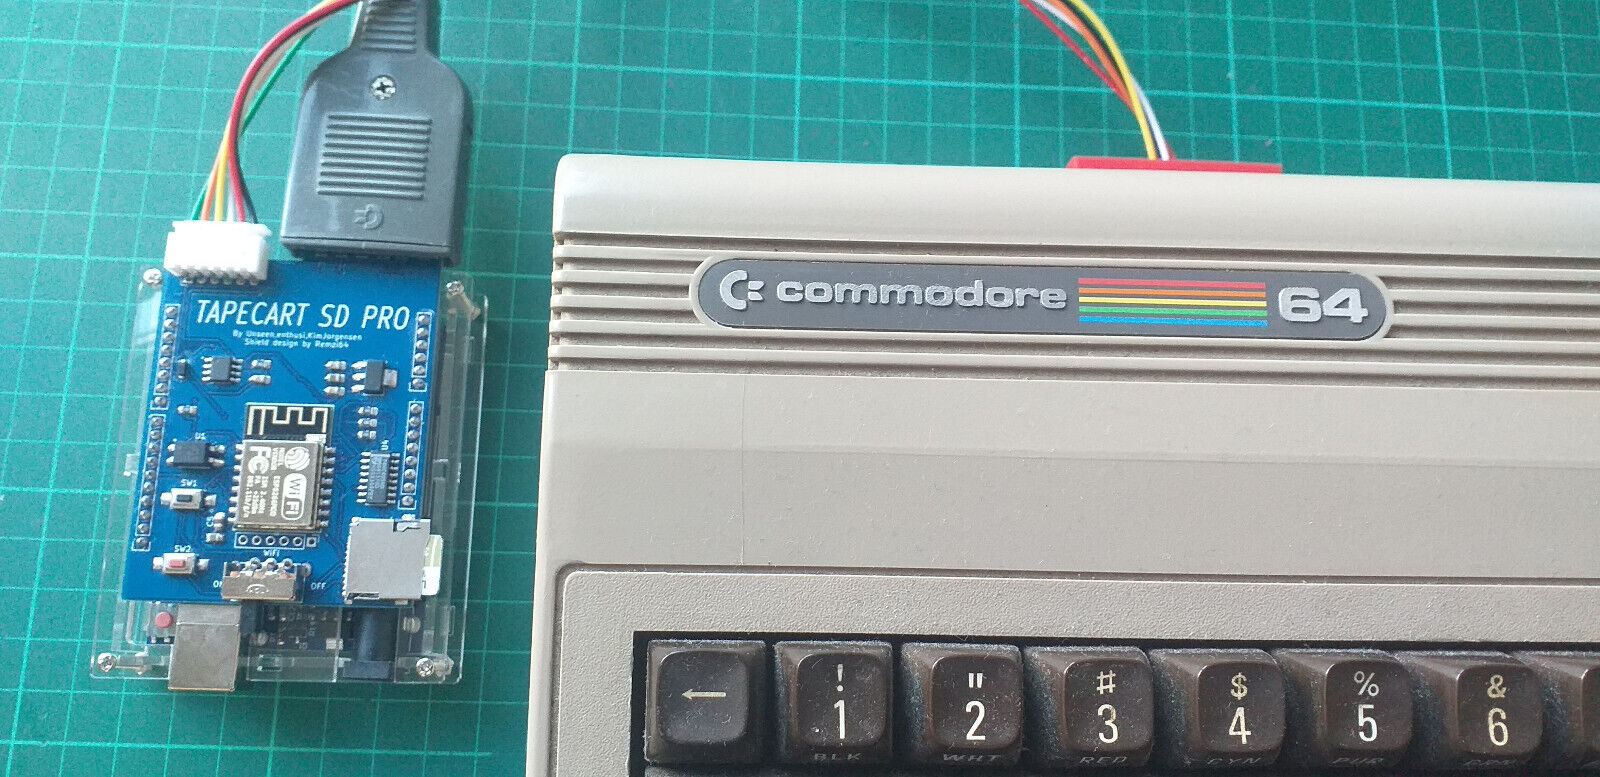 Tapecart SD PRO For Commodore 64 C64